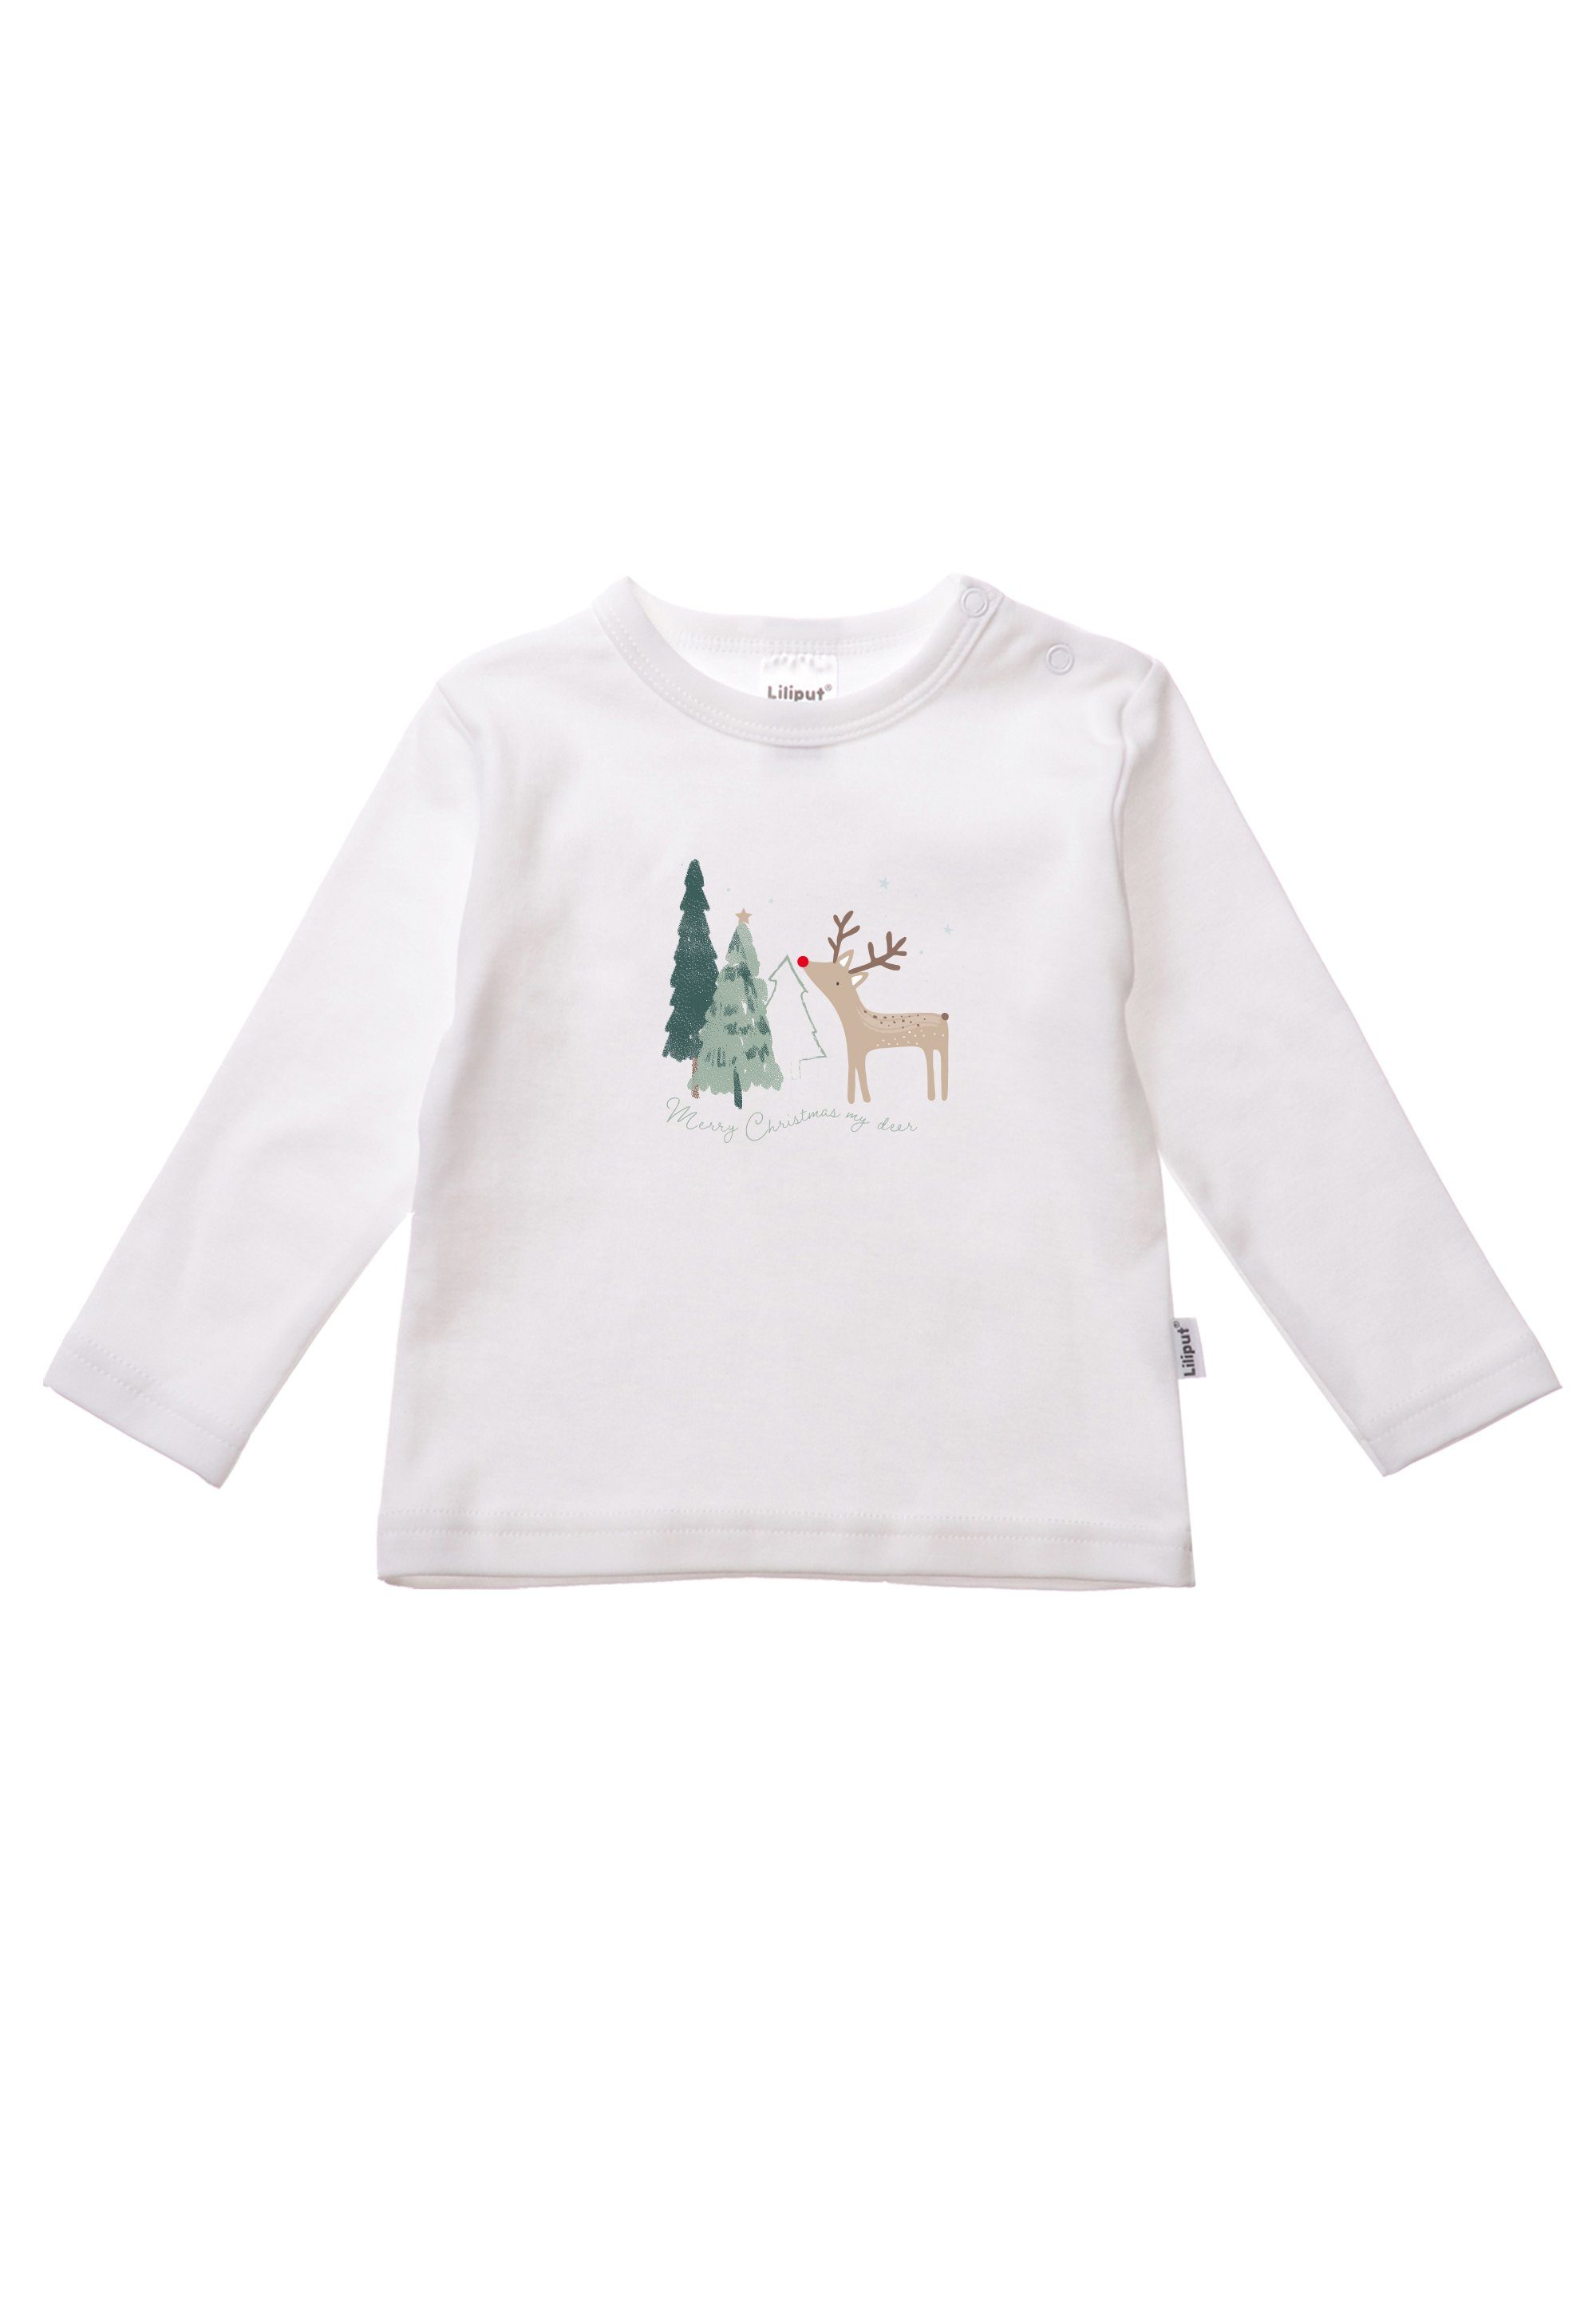 T-Shirt Merry mit Christmas Liliput Rundhalsausschnitt bequemem